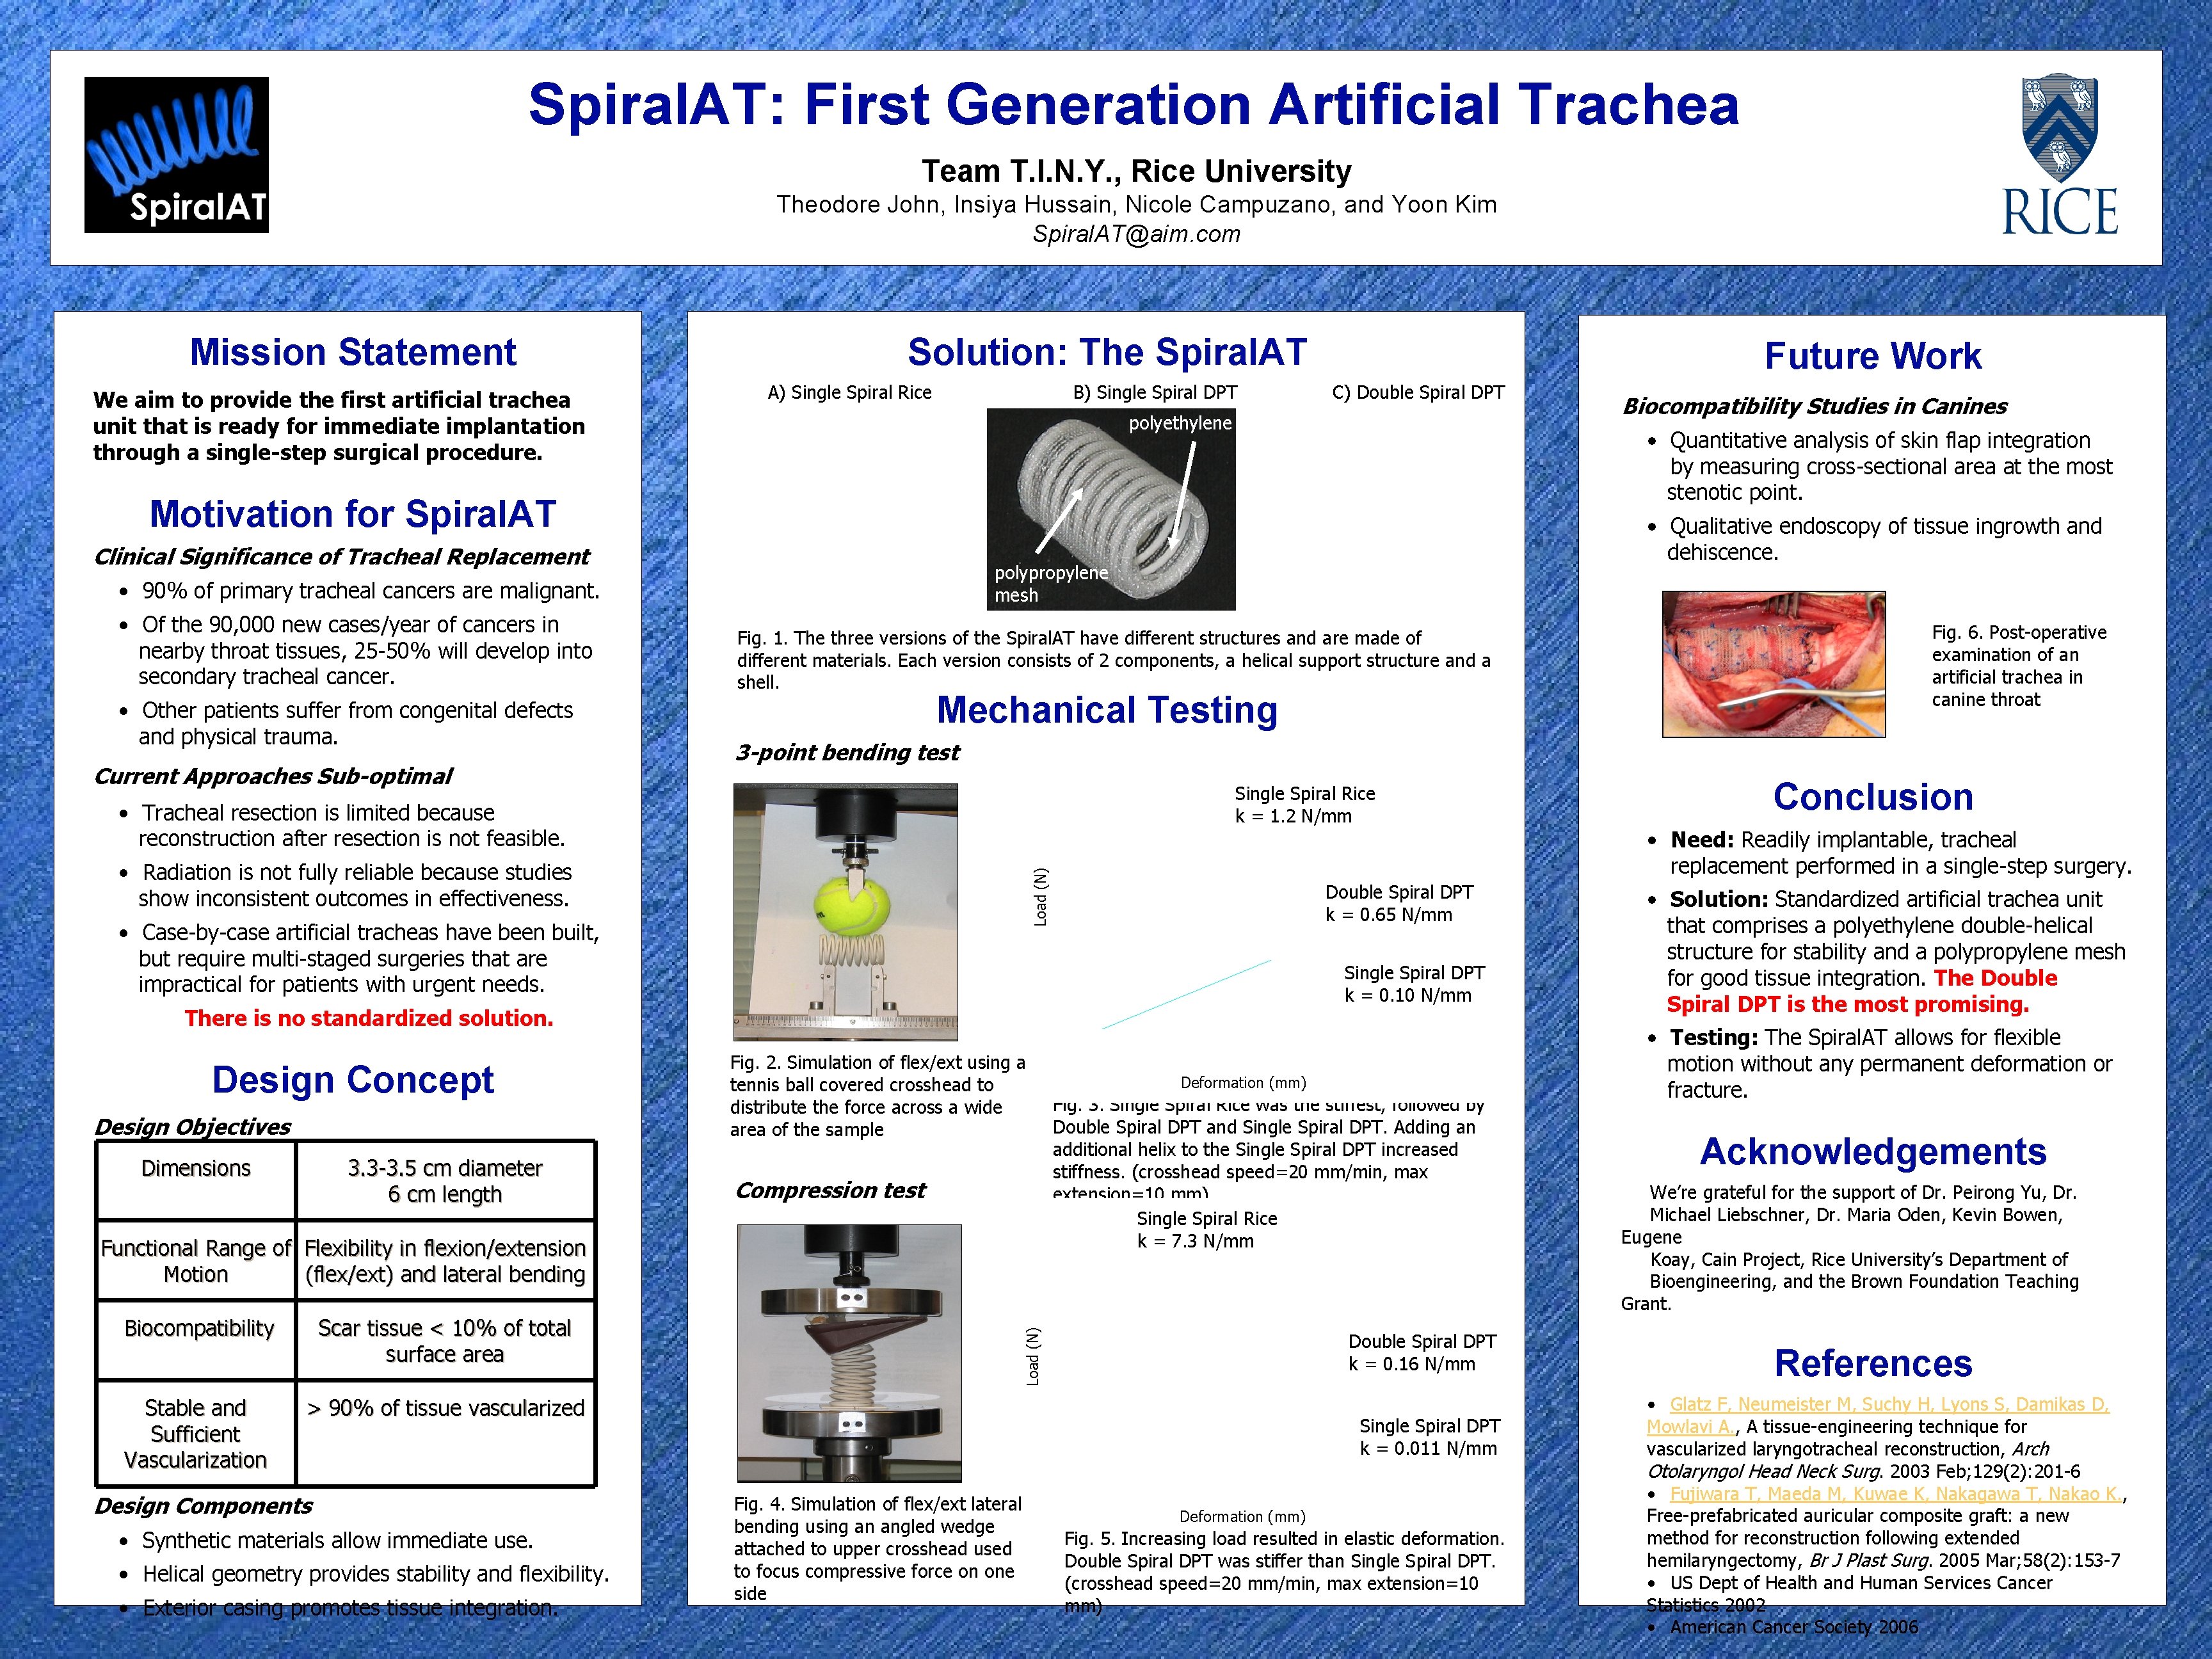 Spiral. AT: First Generation Artificial Trachea Theodore John, Insiya Campuzano, and Yoon Kim Team.